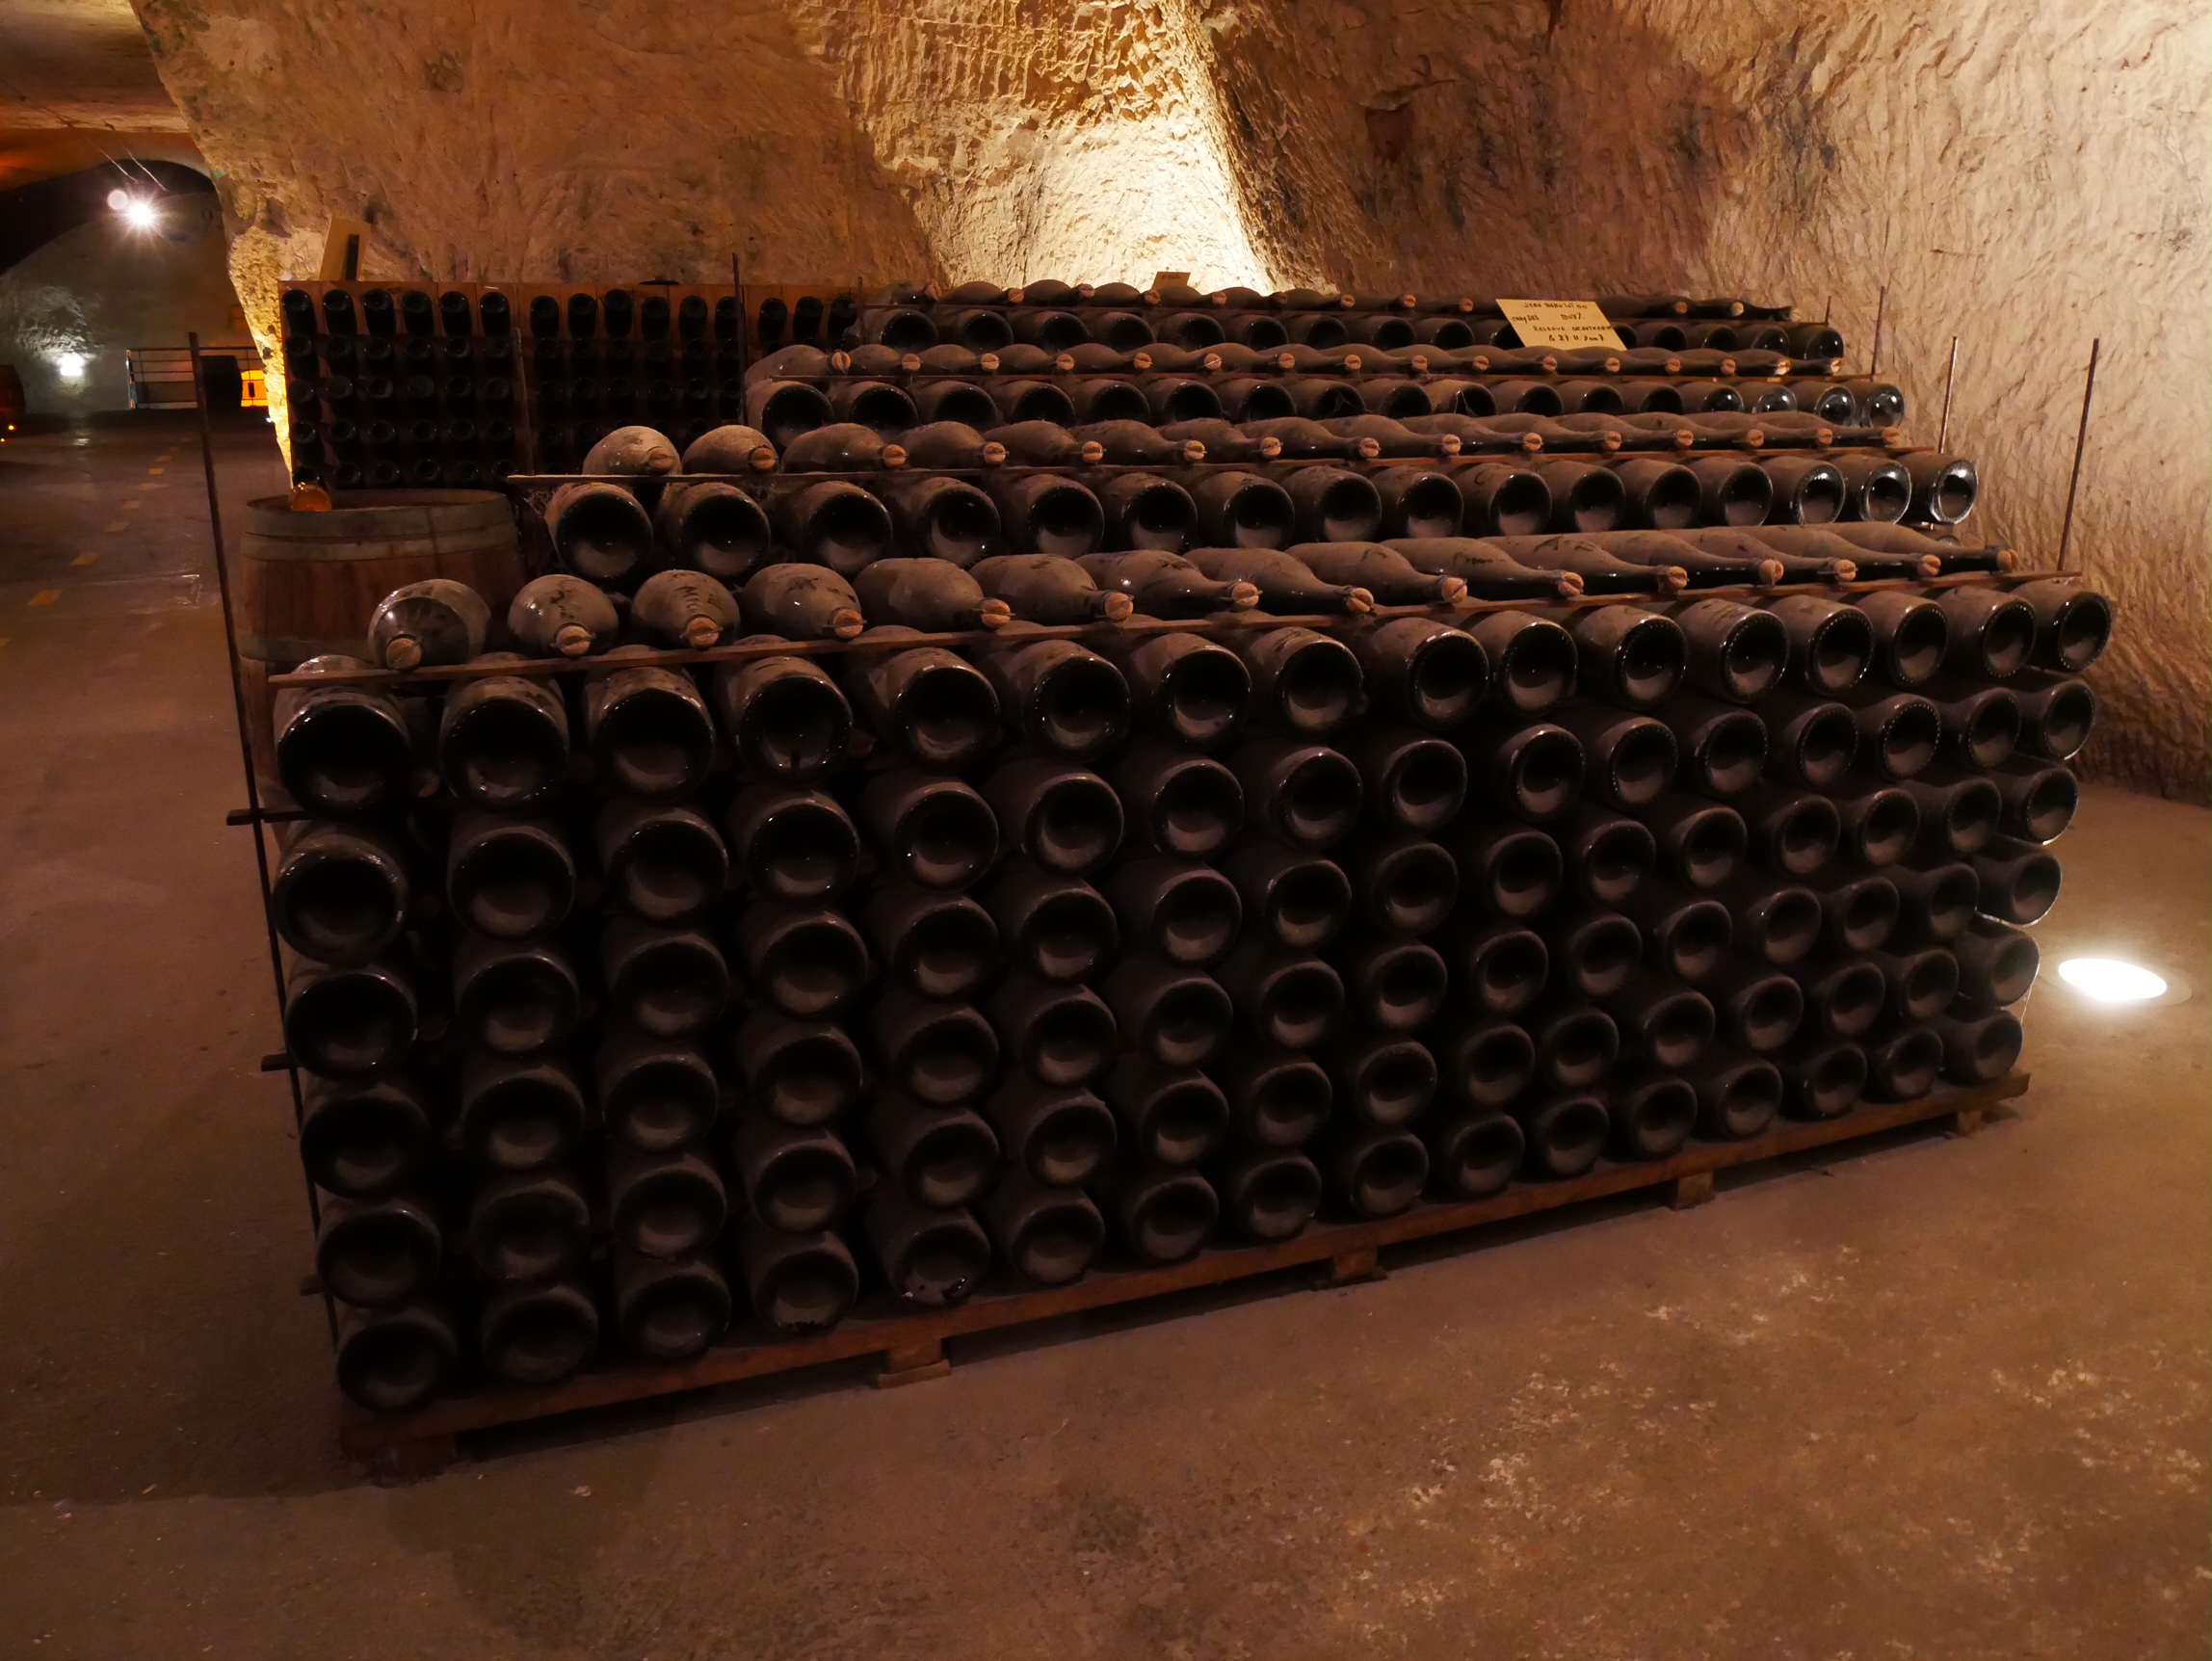 Maison Veuve Clicquot Old Bottles - Cave and Vineyard Visit - Reims - Champagne Region - France